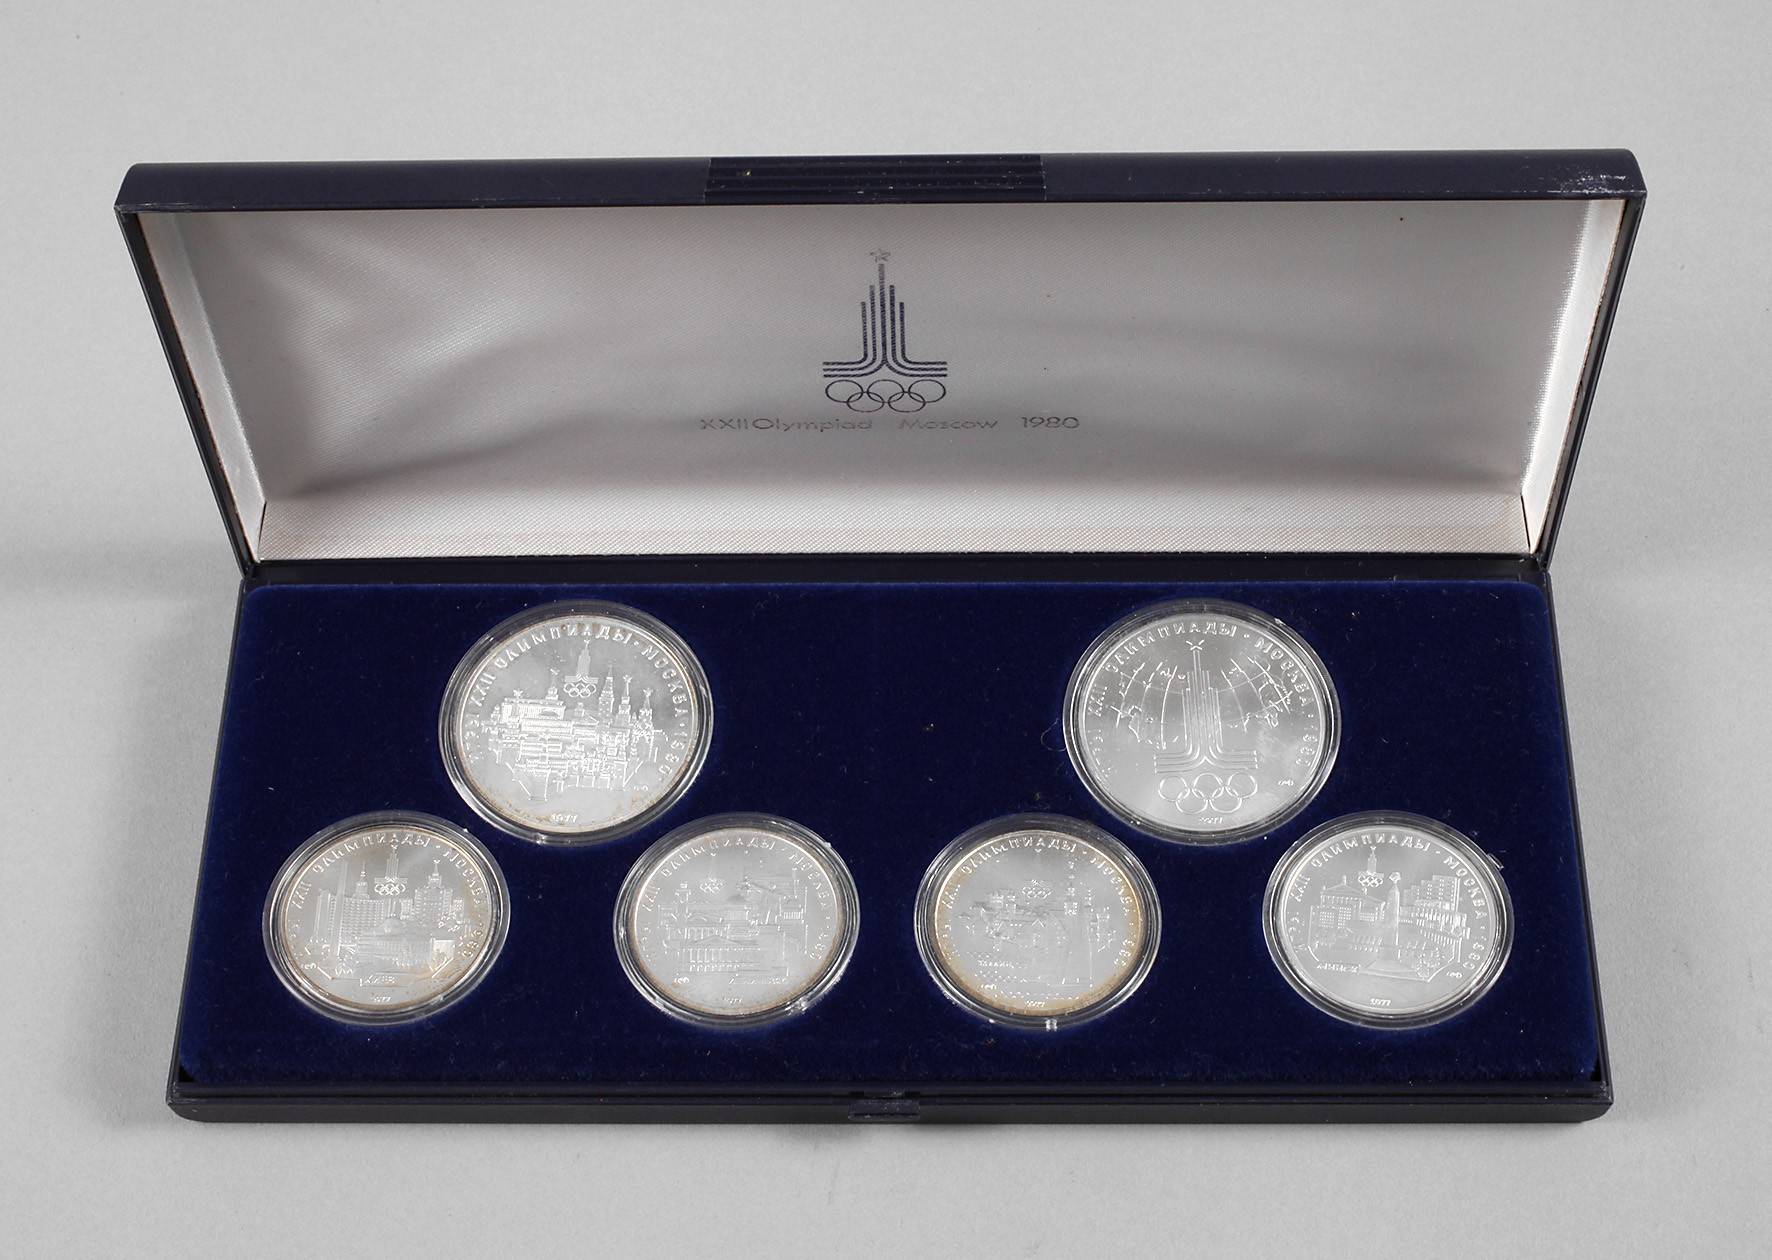 Etui Silbermünzen Olympiade Moskau